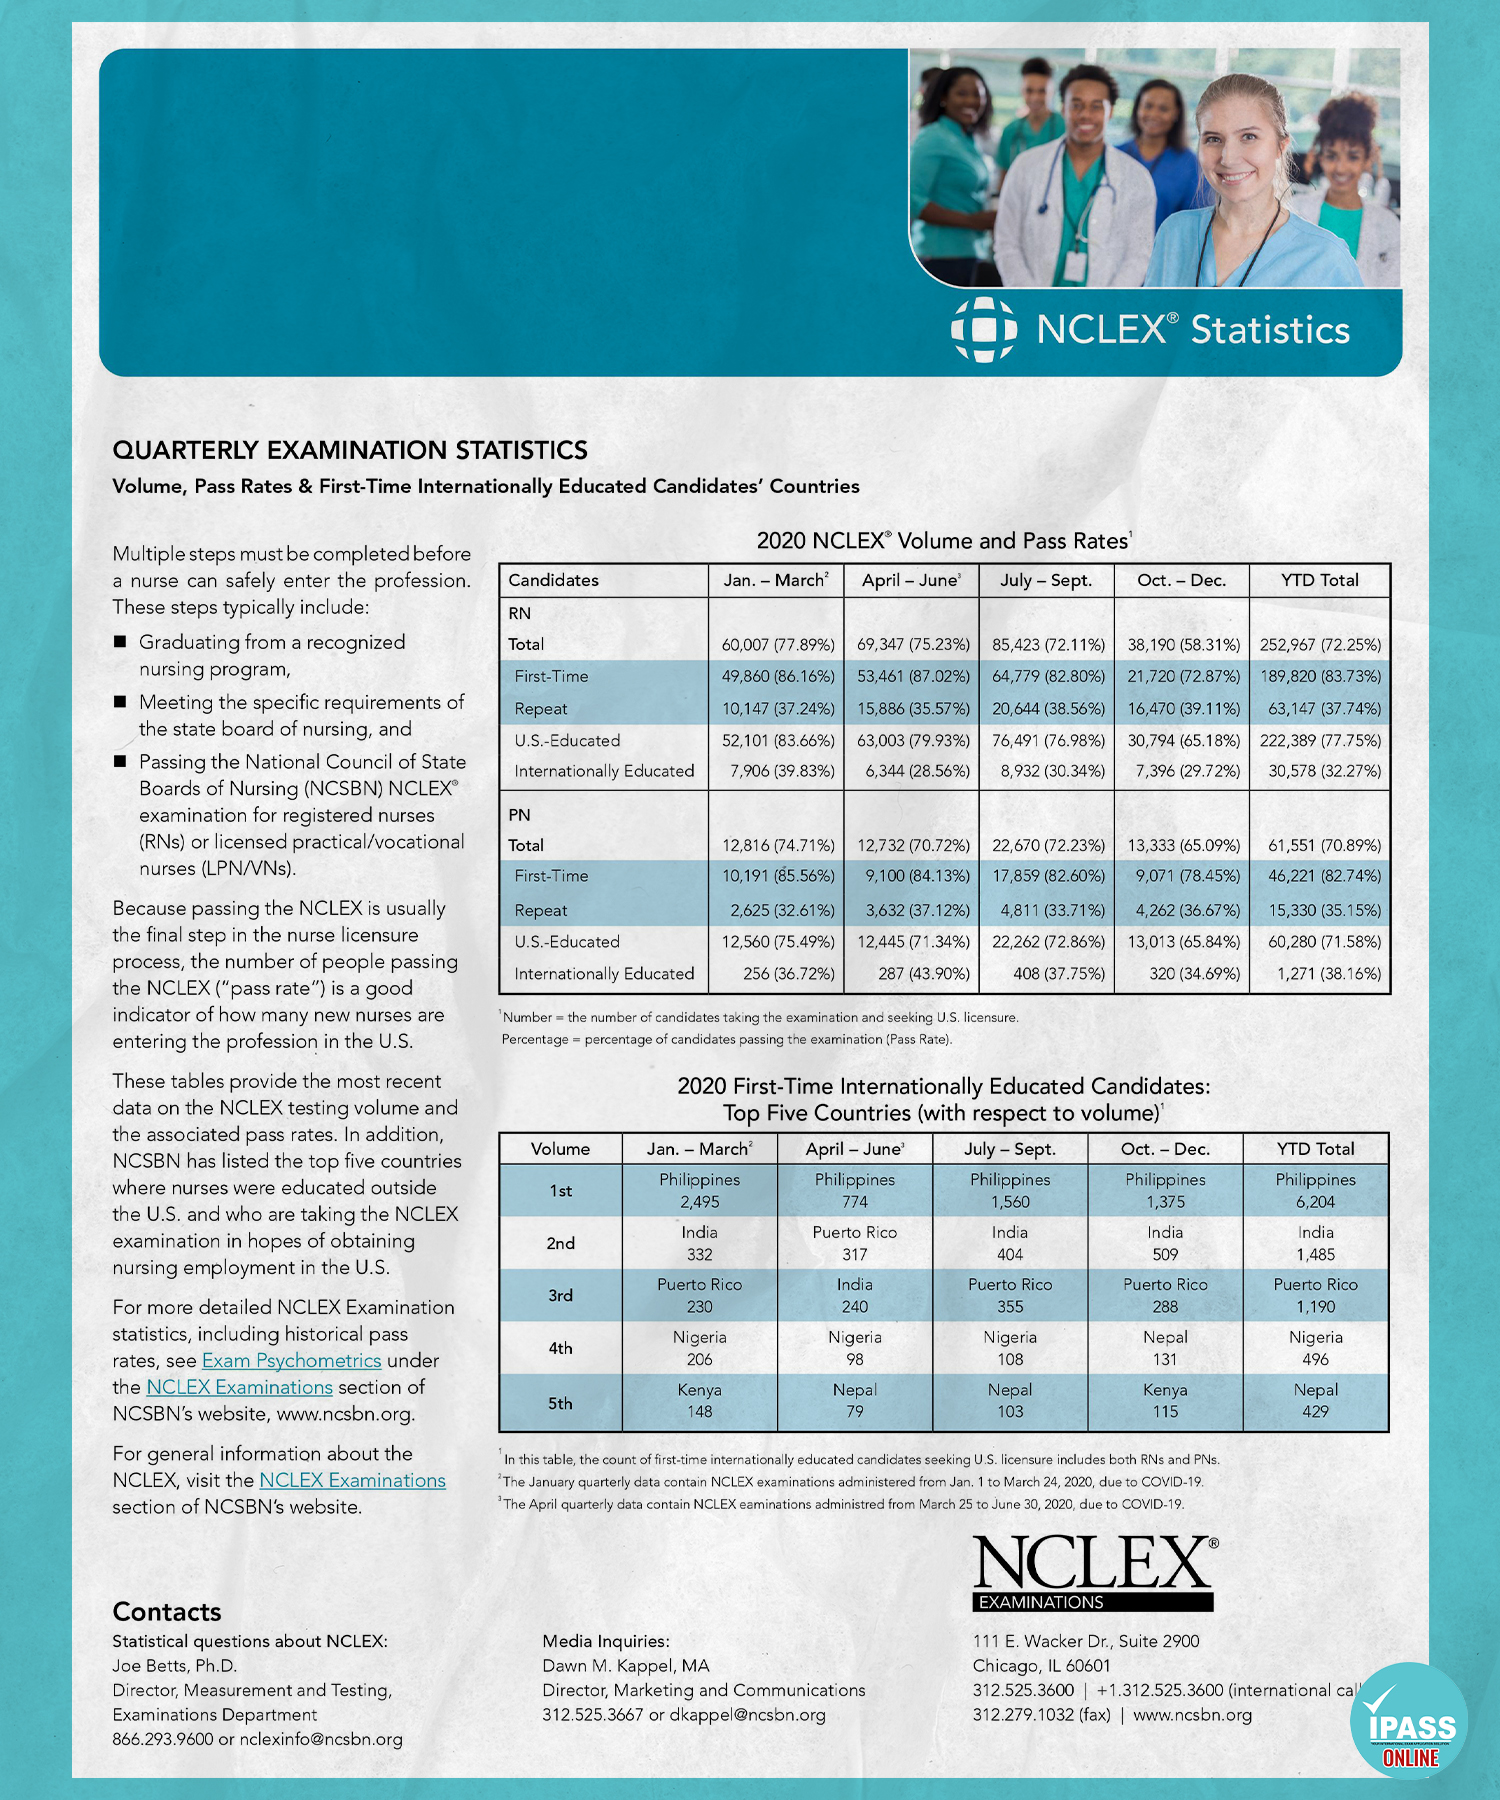 NCLEX-RN and NCLEX-PN 2020 Examination Statistics